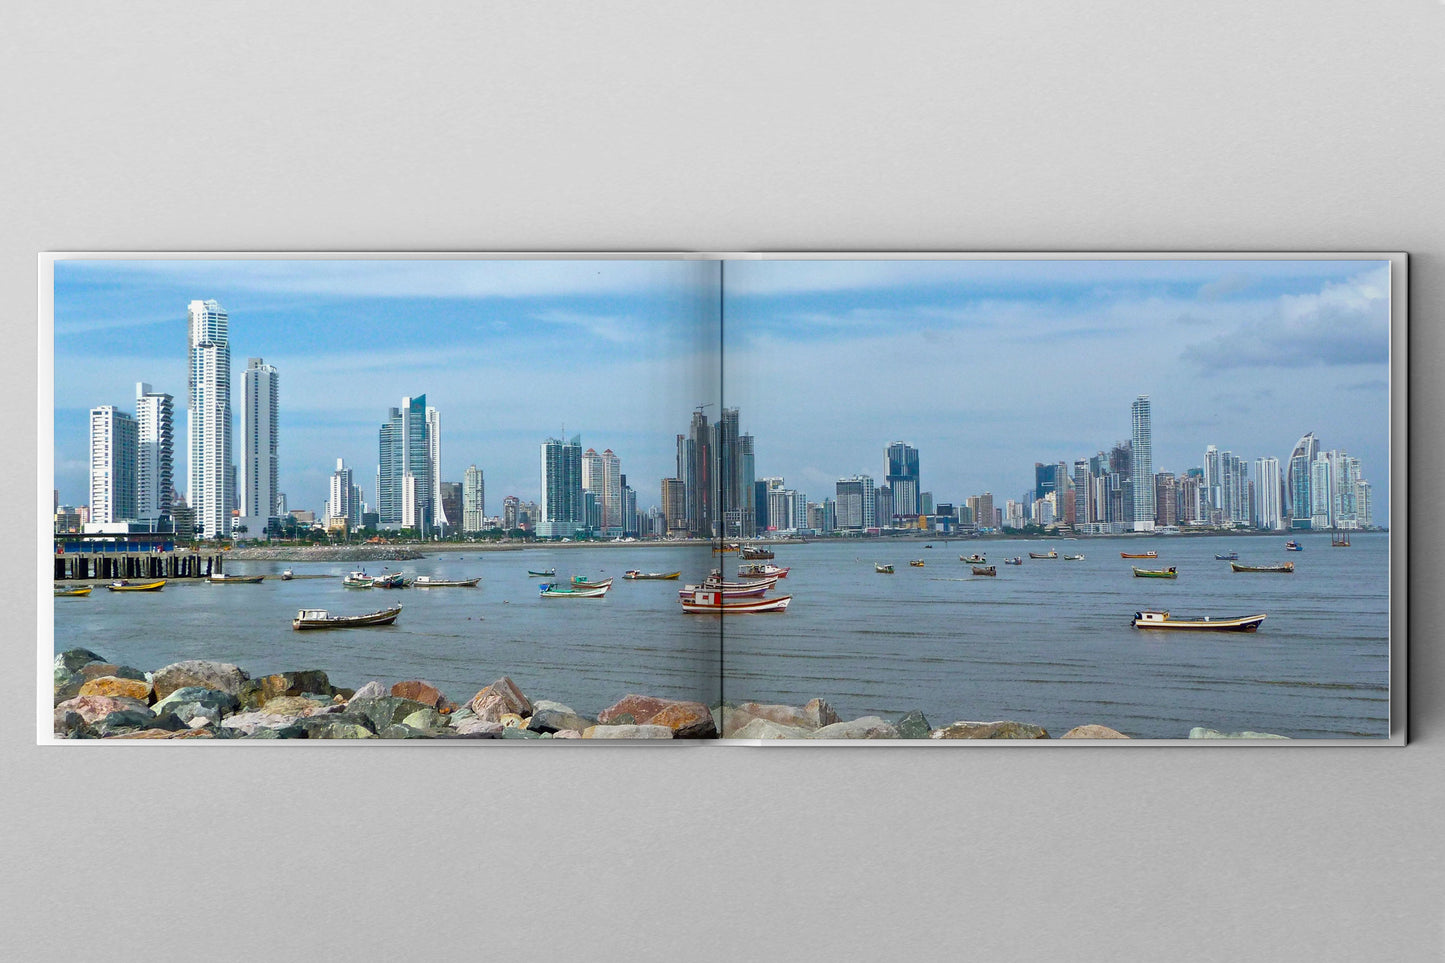 Photo Book Template - Panama [Landscape]